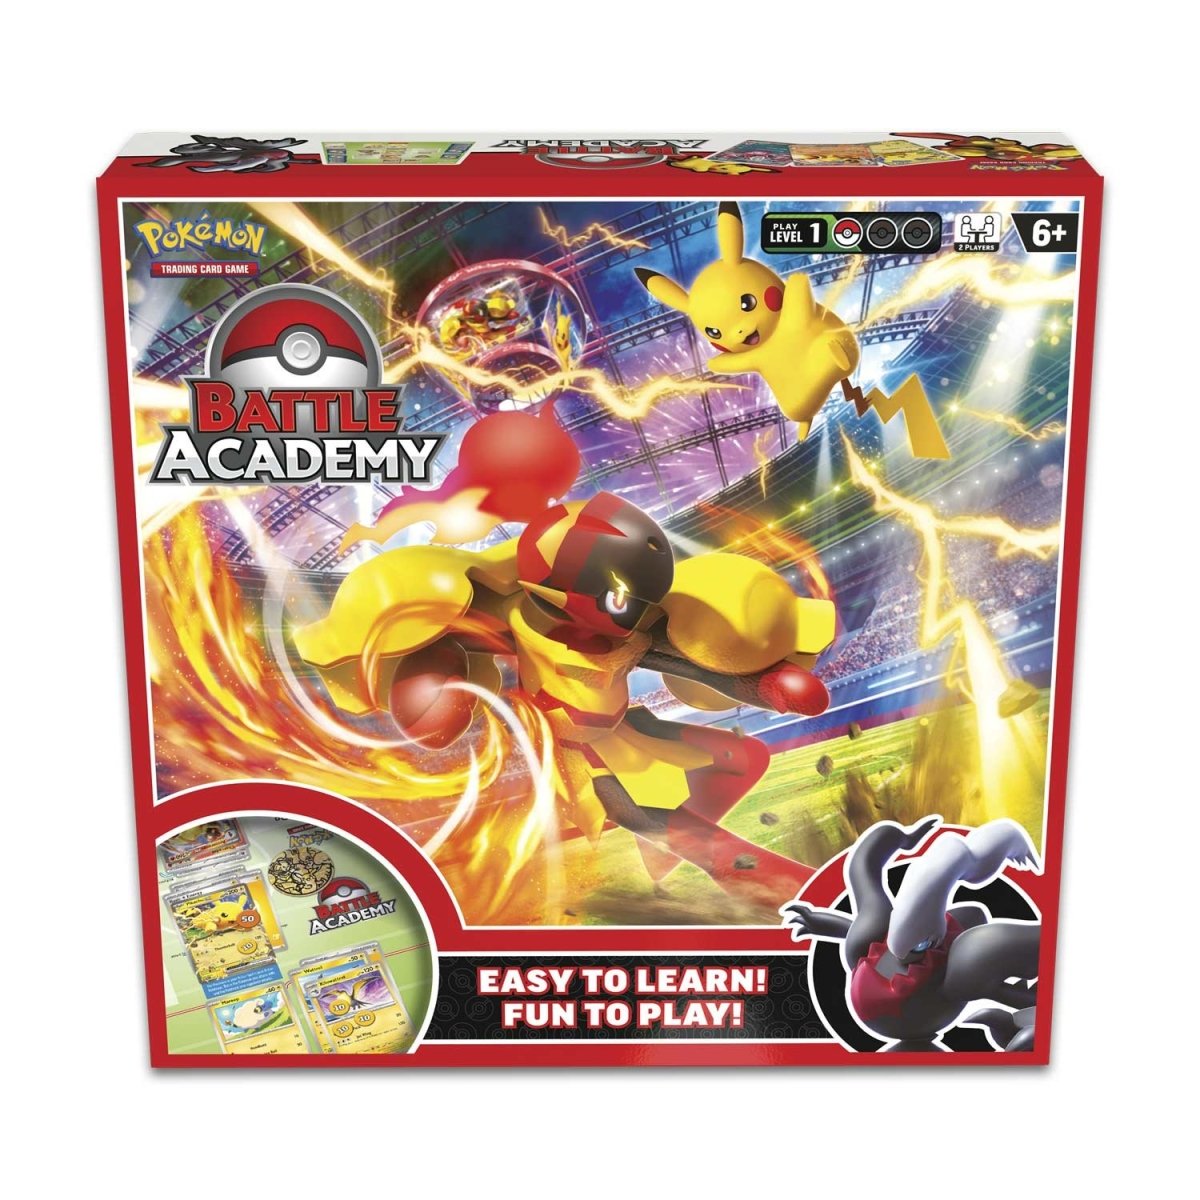 Pokemon Board Game - Battle Academy 2024 (Avec Pikachu, Armarouge & Darkrai)